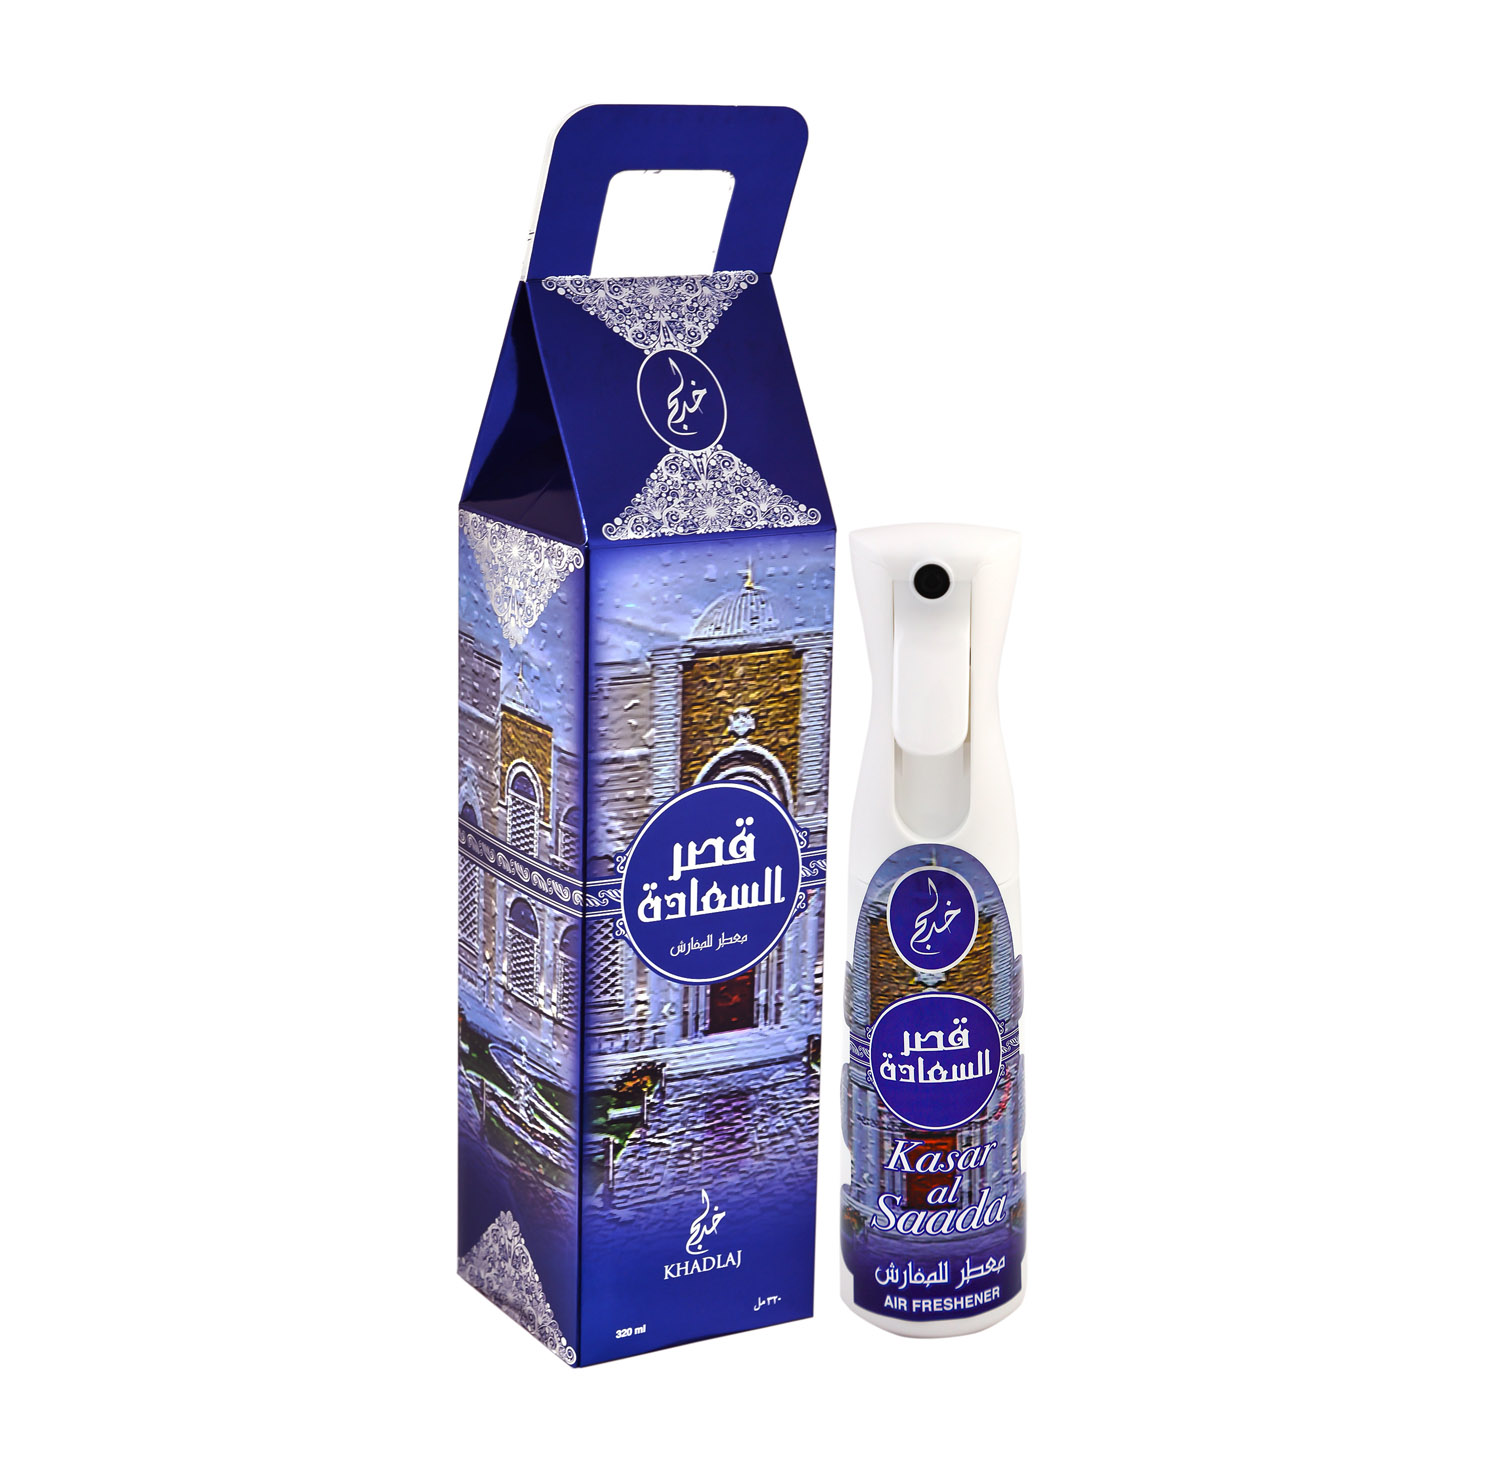 http://atiyasfreshfarm.com/public/storage/photos/1/New product/Kasar Al Saada Khadlaj Air Freshener (320ml).jpg